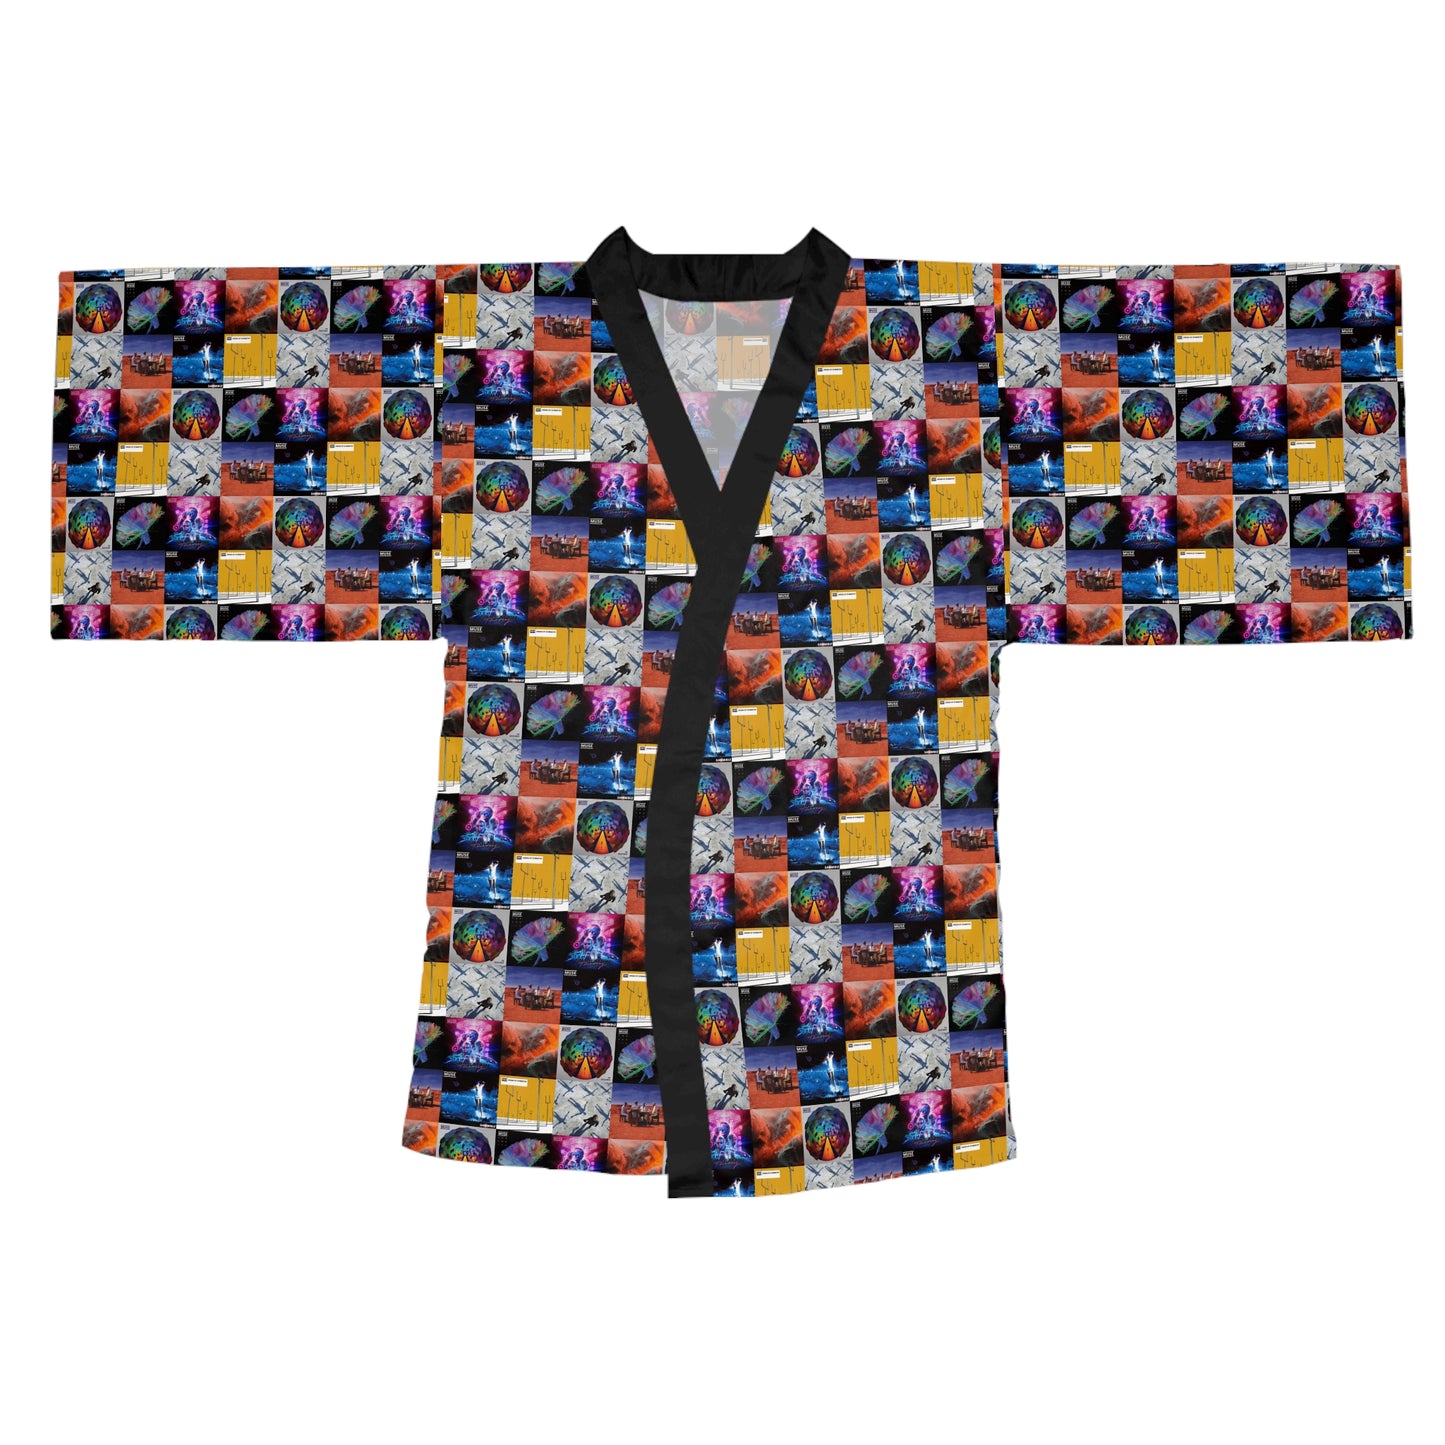 Muse Album Cover Collage Long Sleeve Kimono Robe